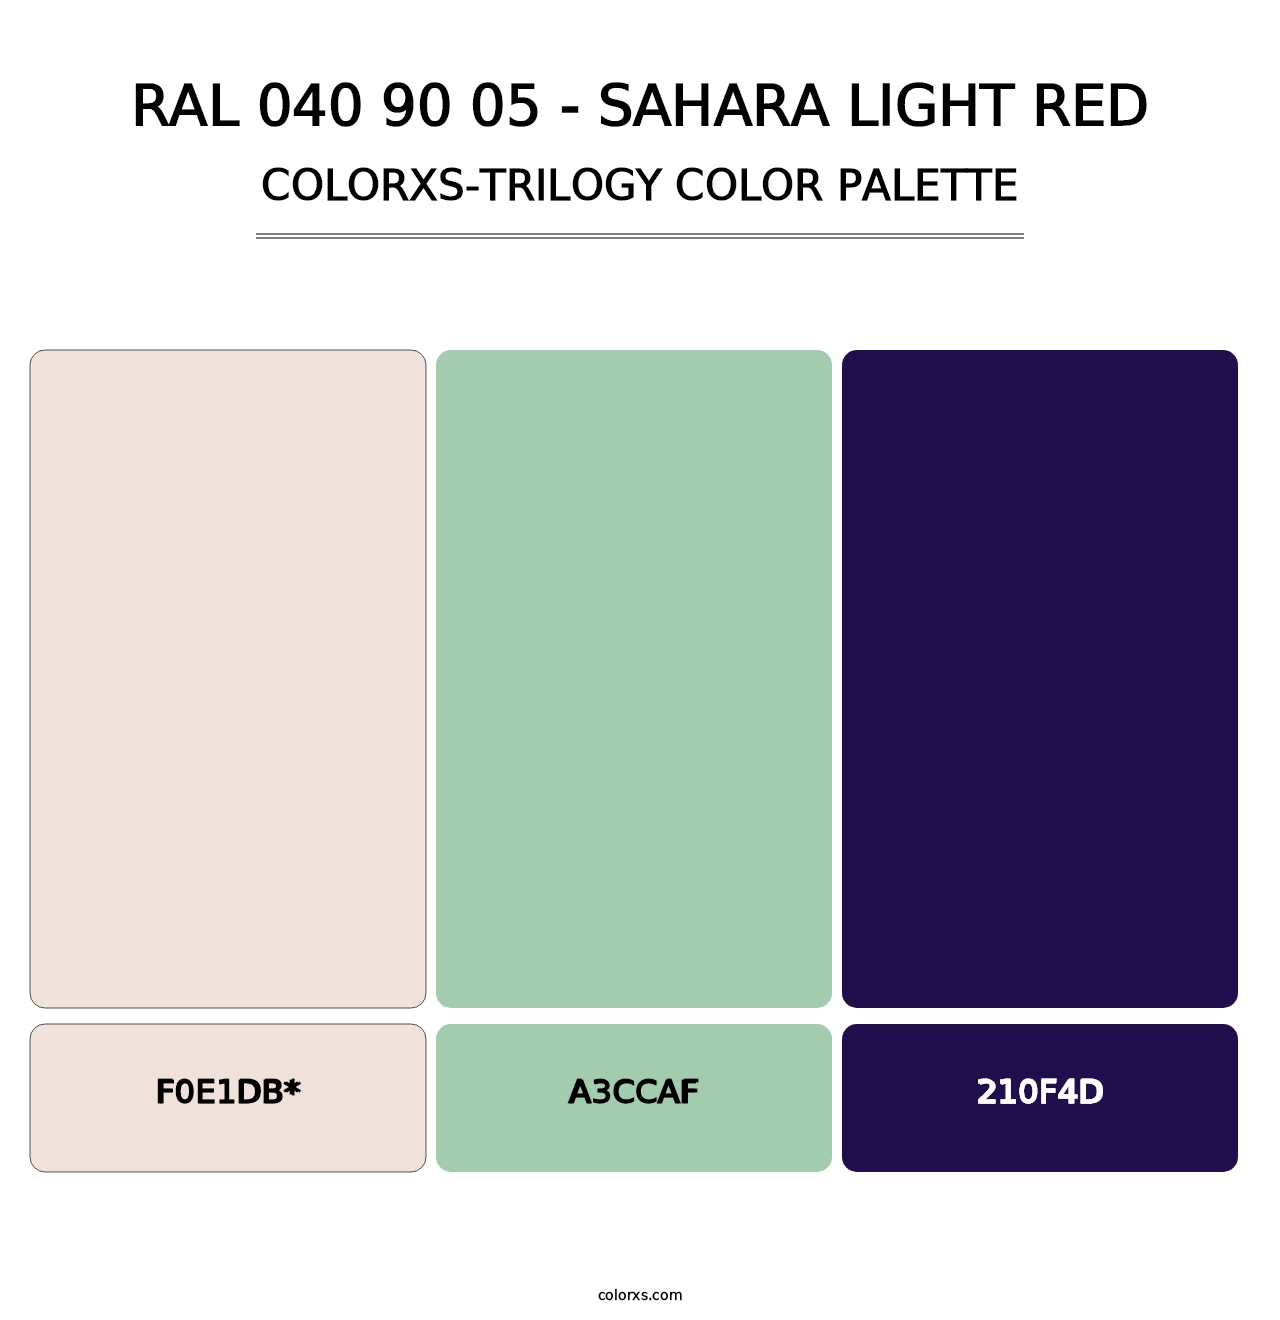 RAL 040 90 05 - Sahara Light Red - Colorxs Trilogy Palette